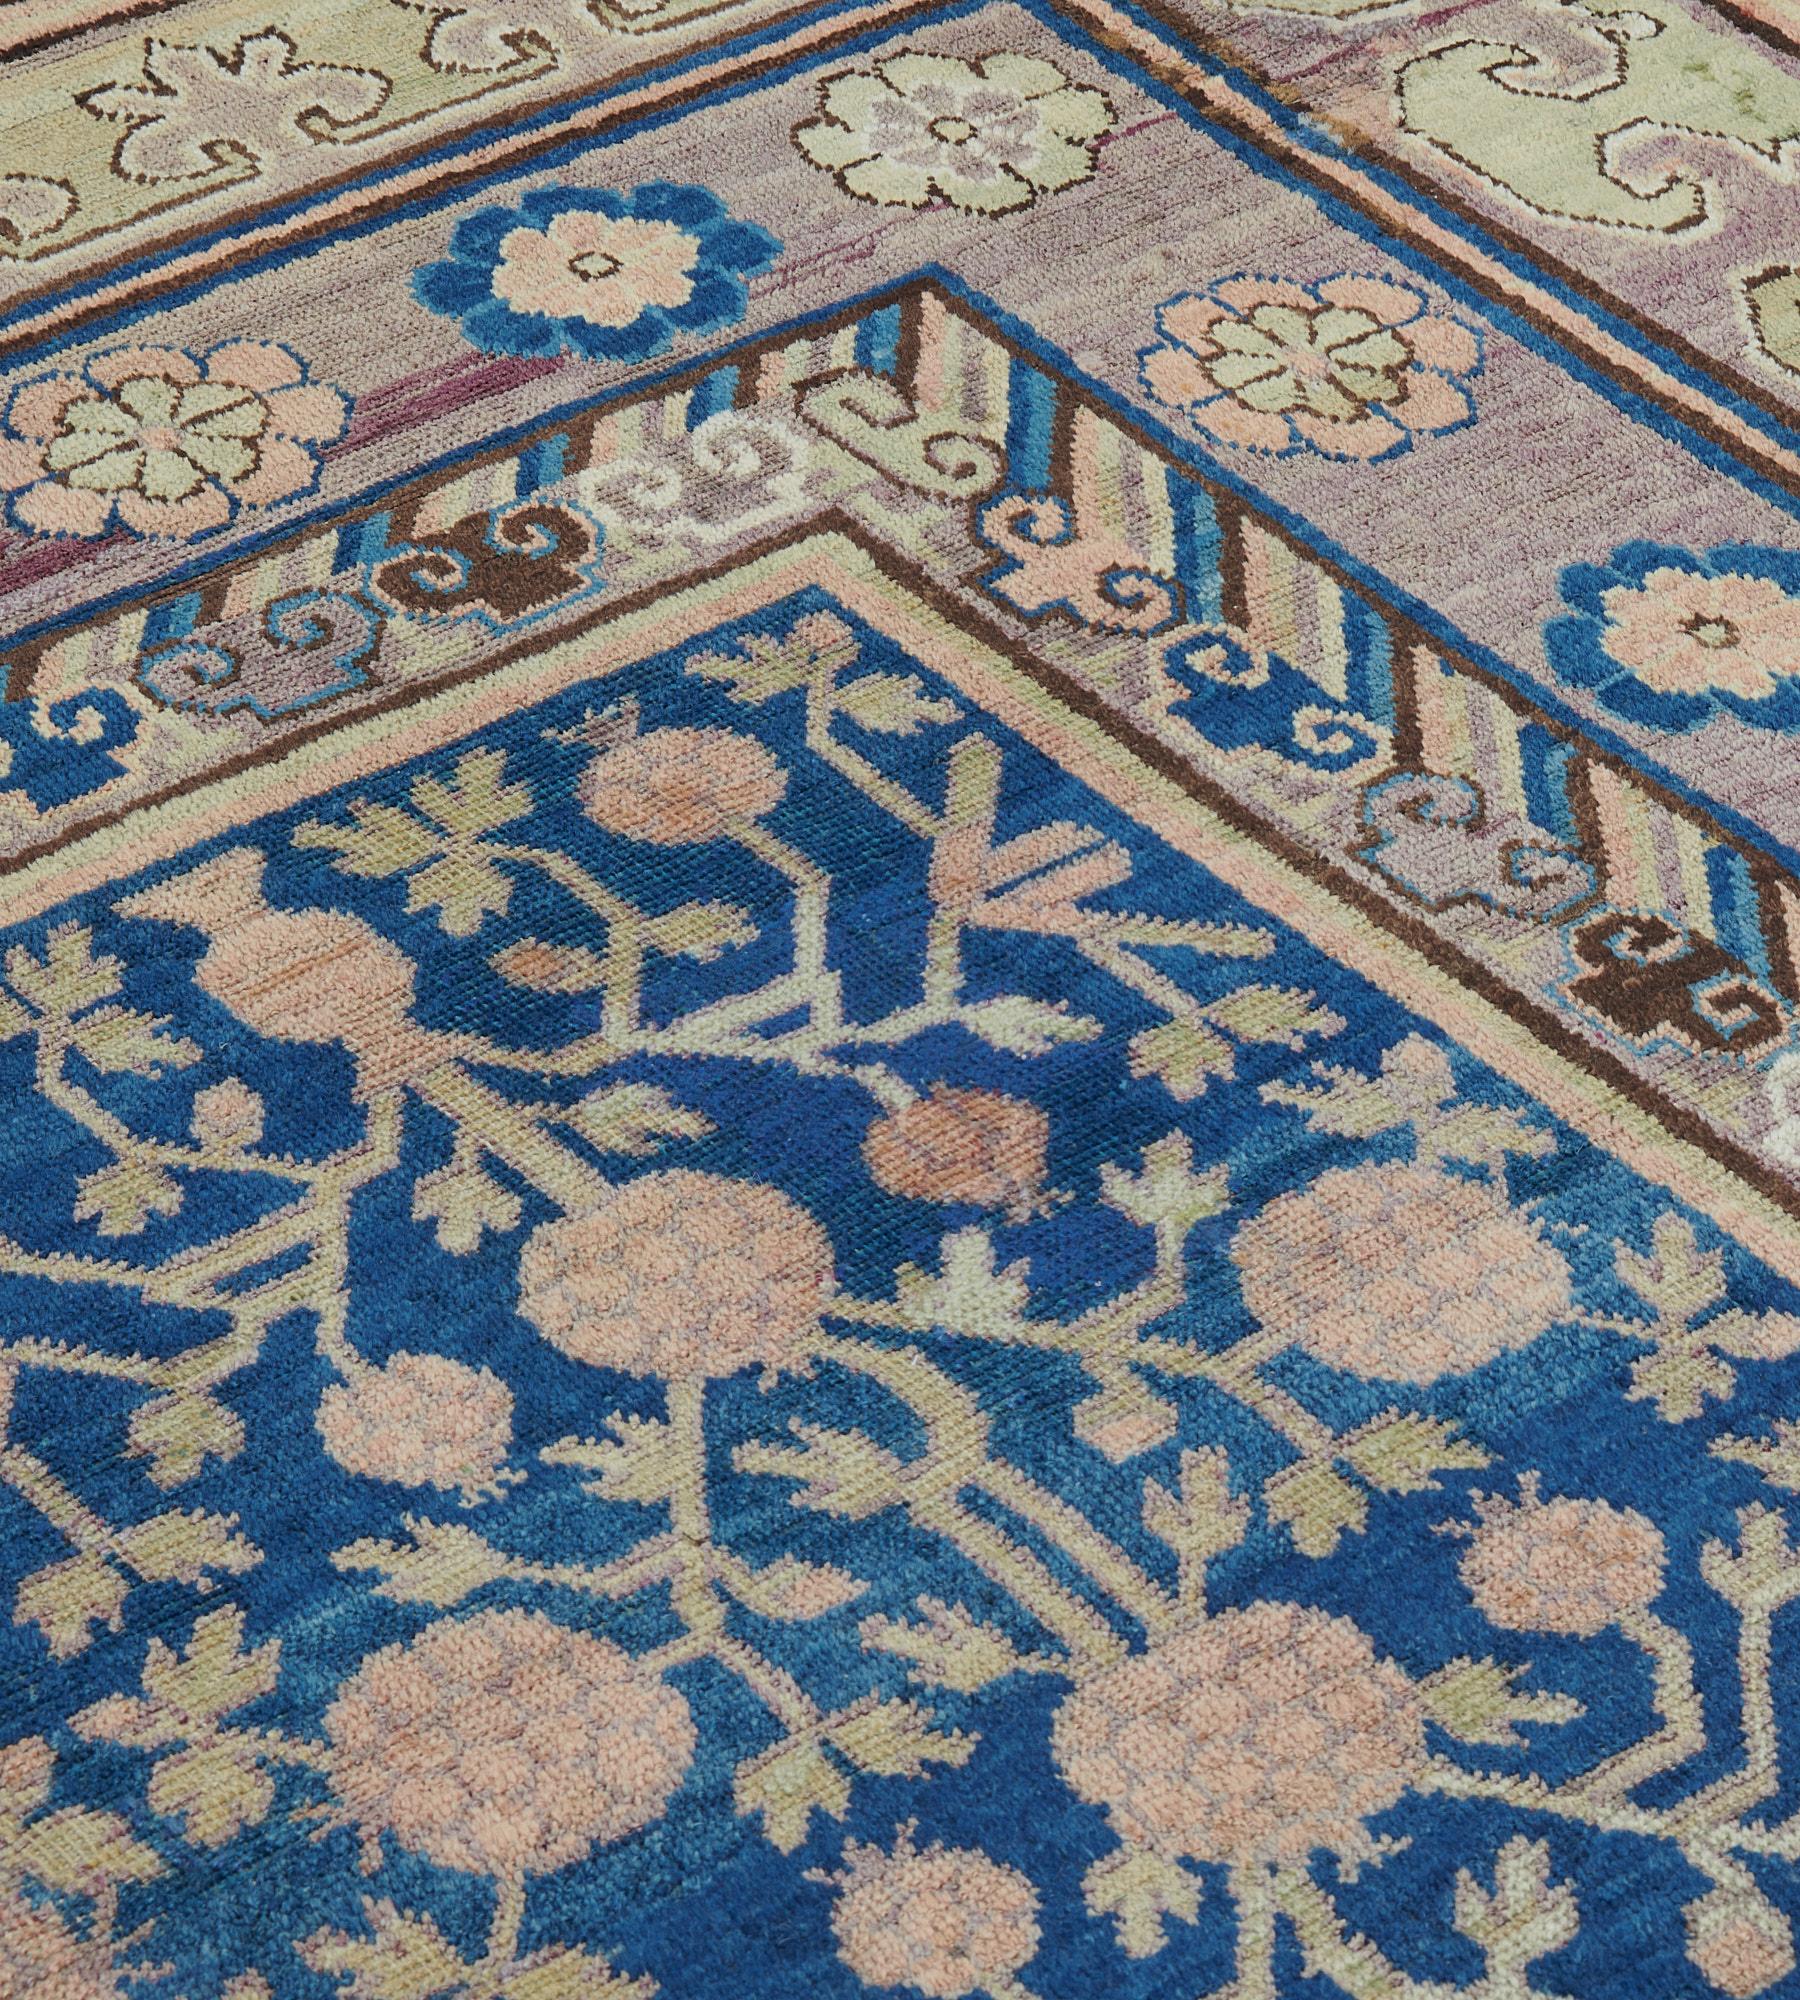 19th Century Antique Royal Blue Handwoven Wool Pomegranate Khotan Rug For Sale